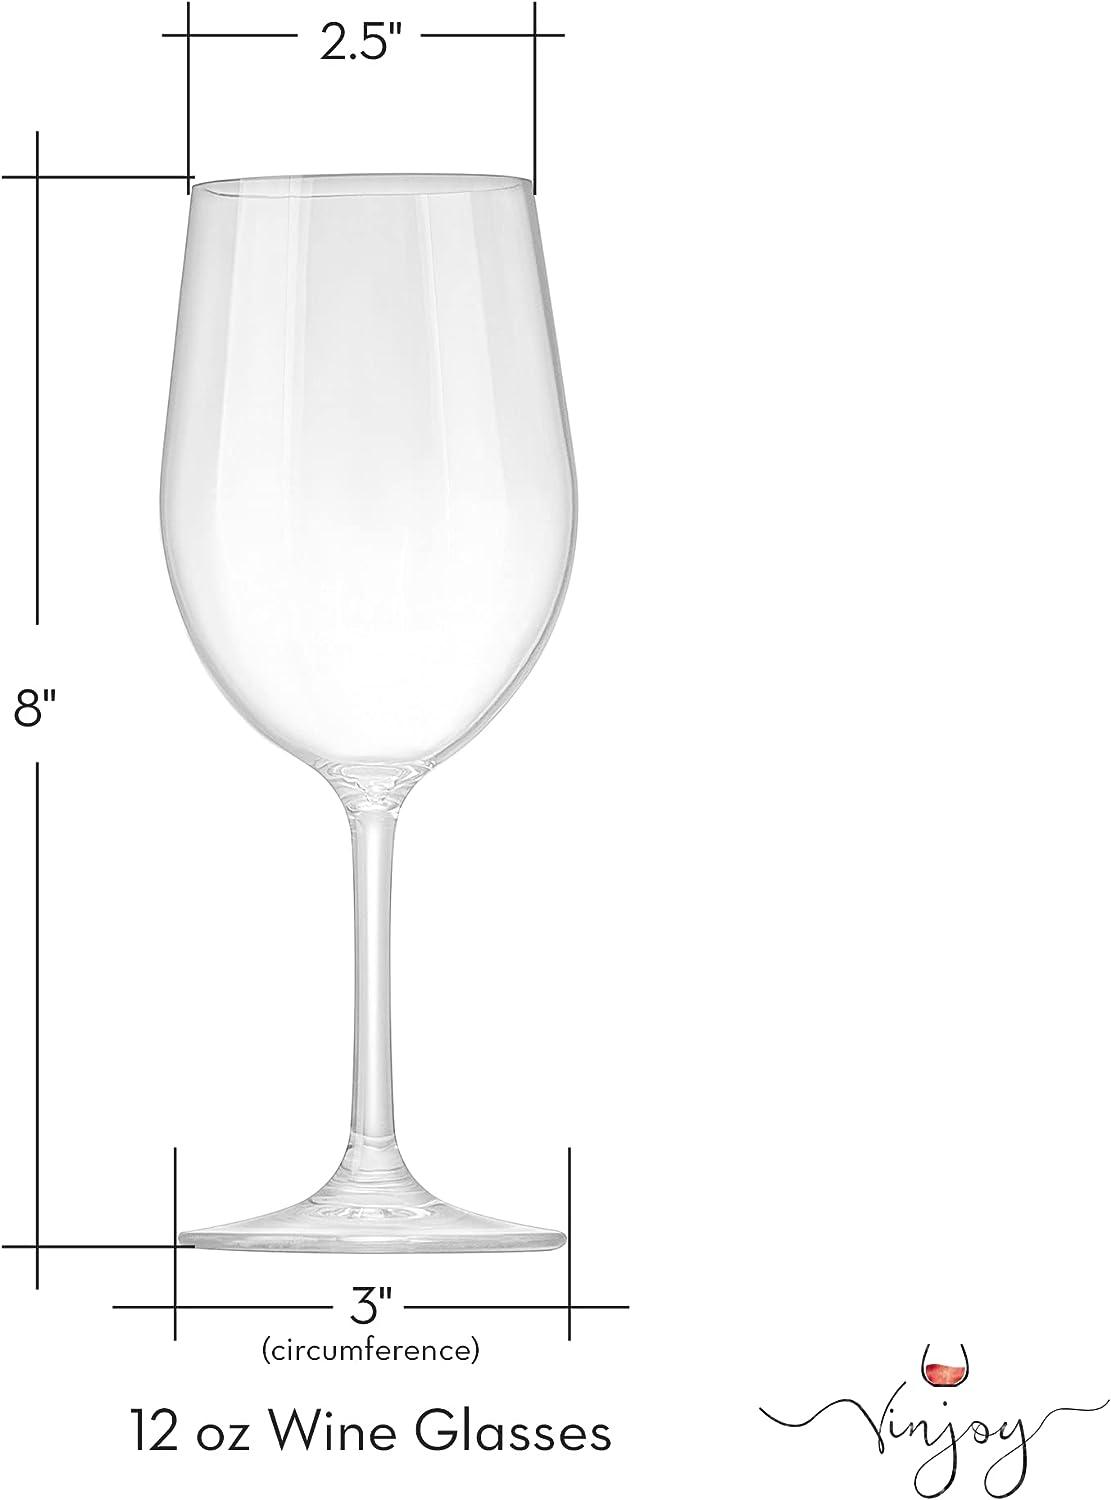 4pc/Set Shatterproof Plastic Wine Glass Unbreakable PCTG Red Wine Tumbler  Glasses Cups Reusable Transparent Fruit Juice Beer Cup